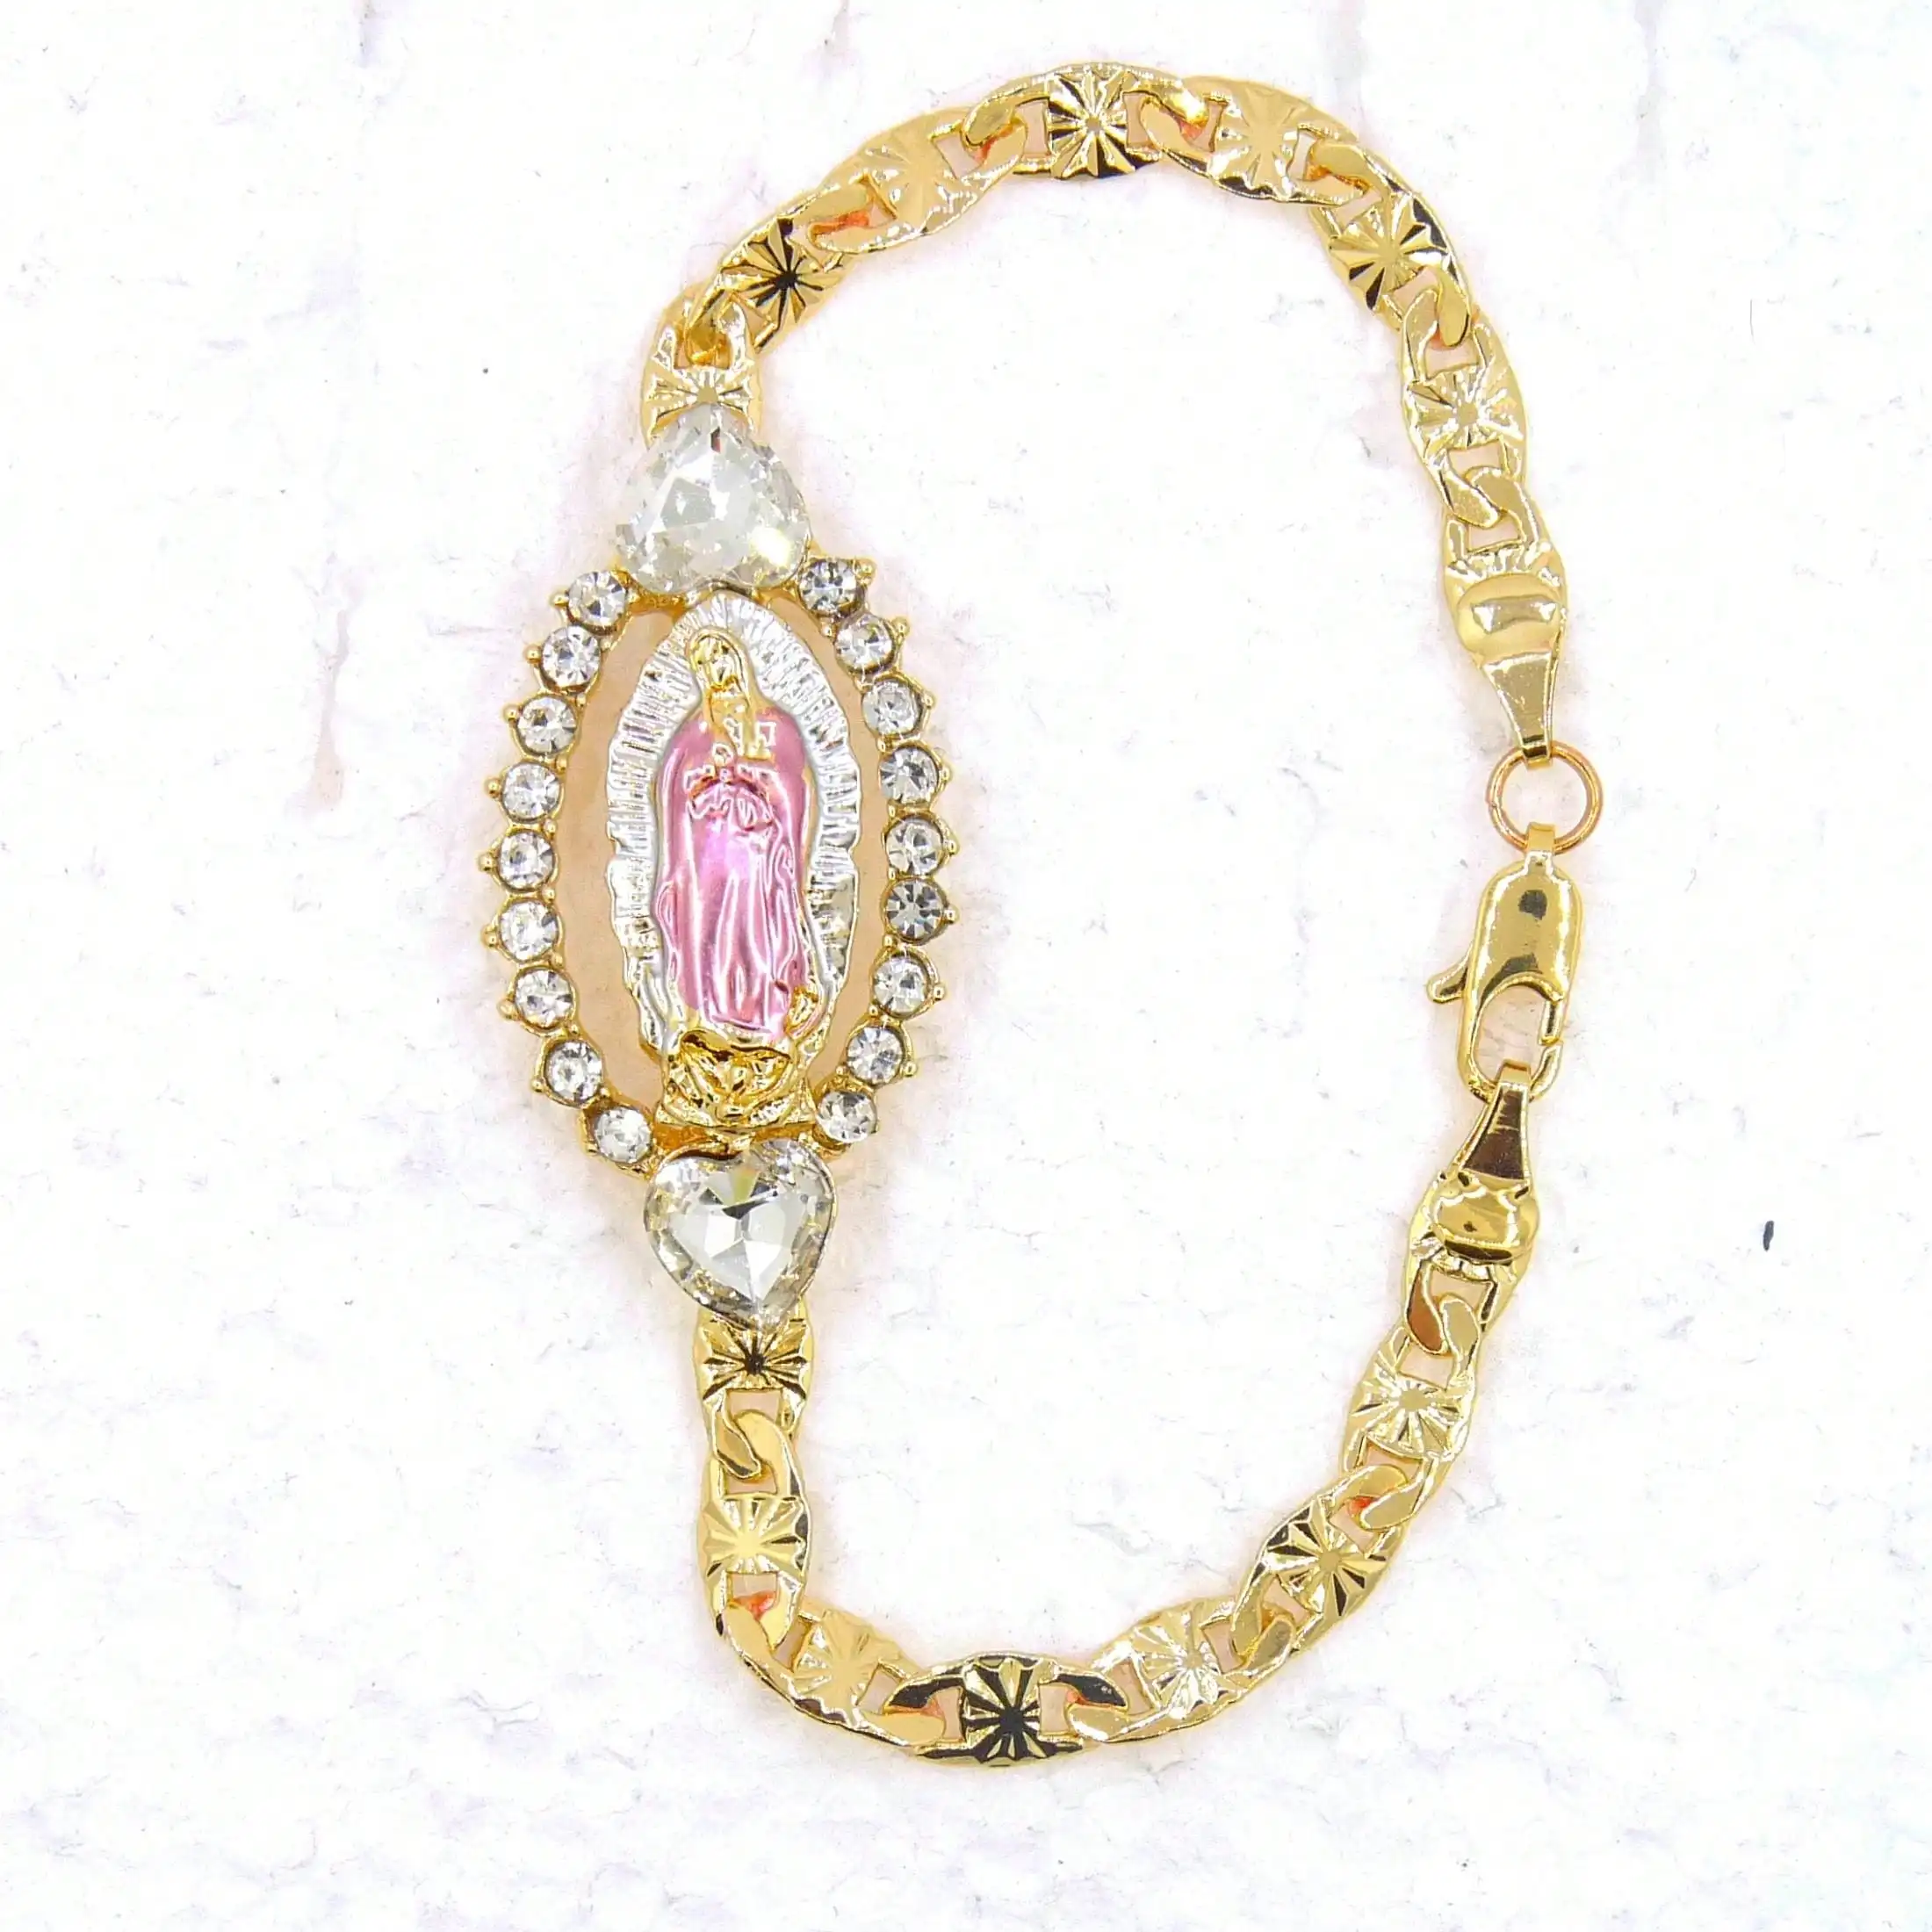 1pc Heart Zircon Gold Plated Virgin Mary MaMa St. Jude St Judas Women's Fashion Religious Bracelet Length 7 Inches